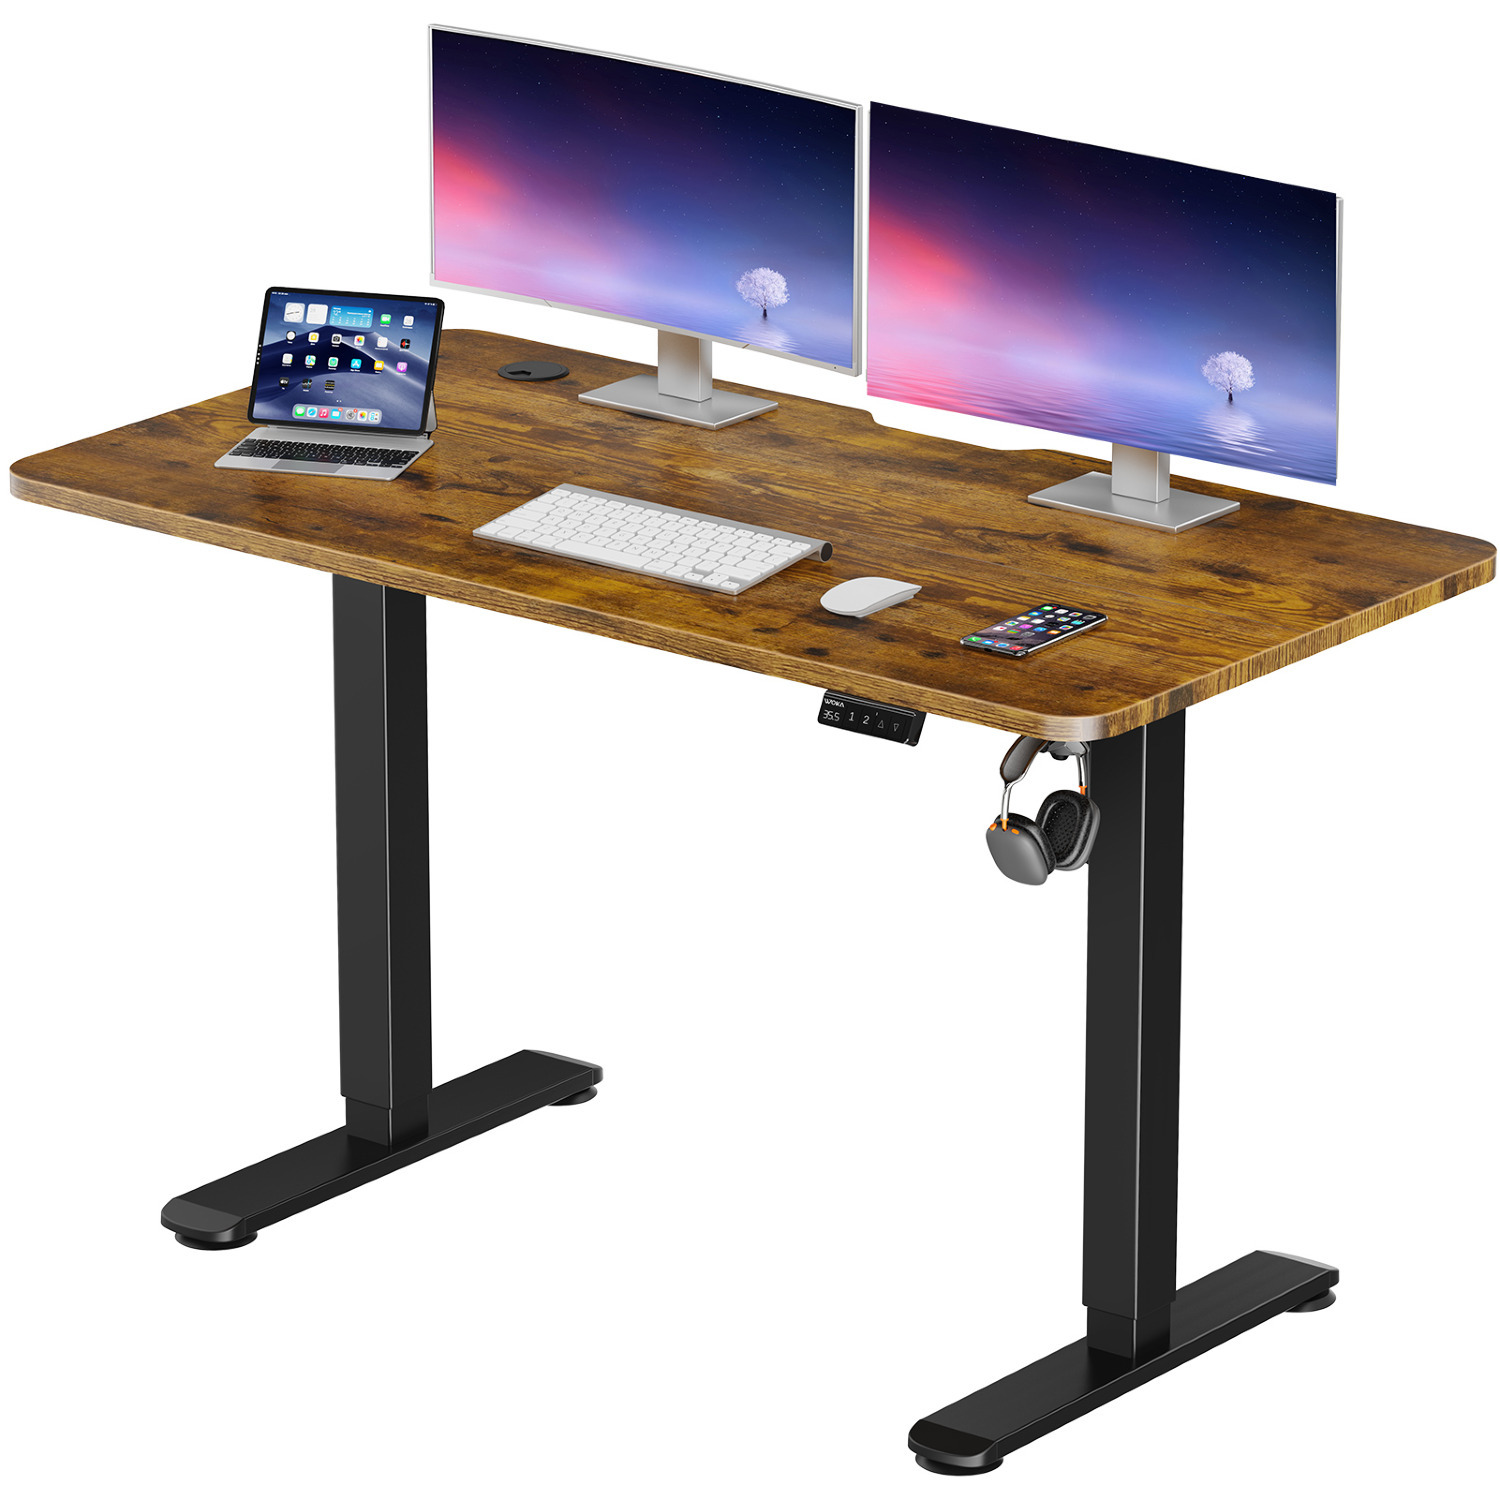 WOKA 48" x 24" Electric Standing Desk w/ Memory Controller (Rustic Brown) $100 + Free Shipping